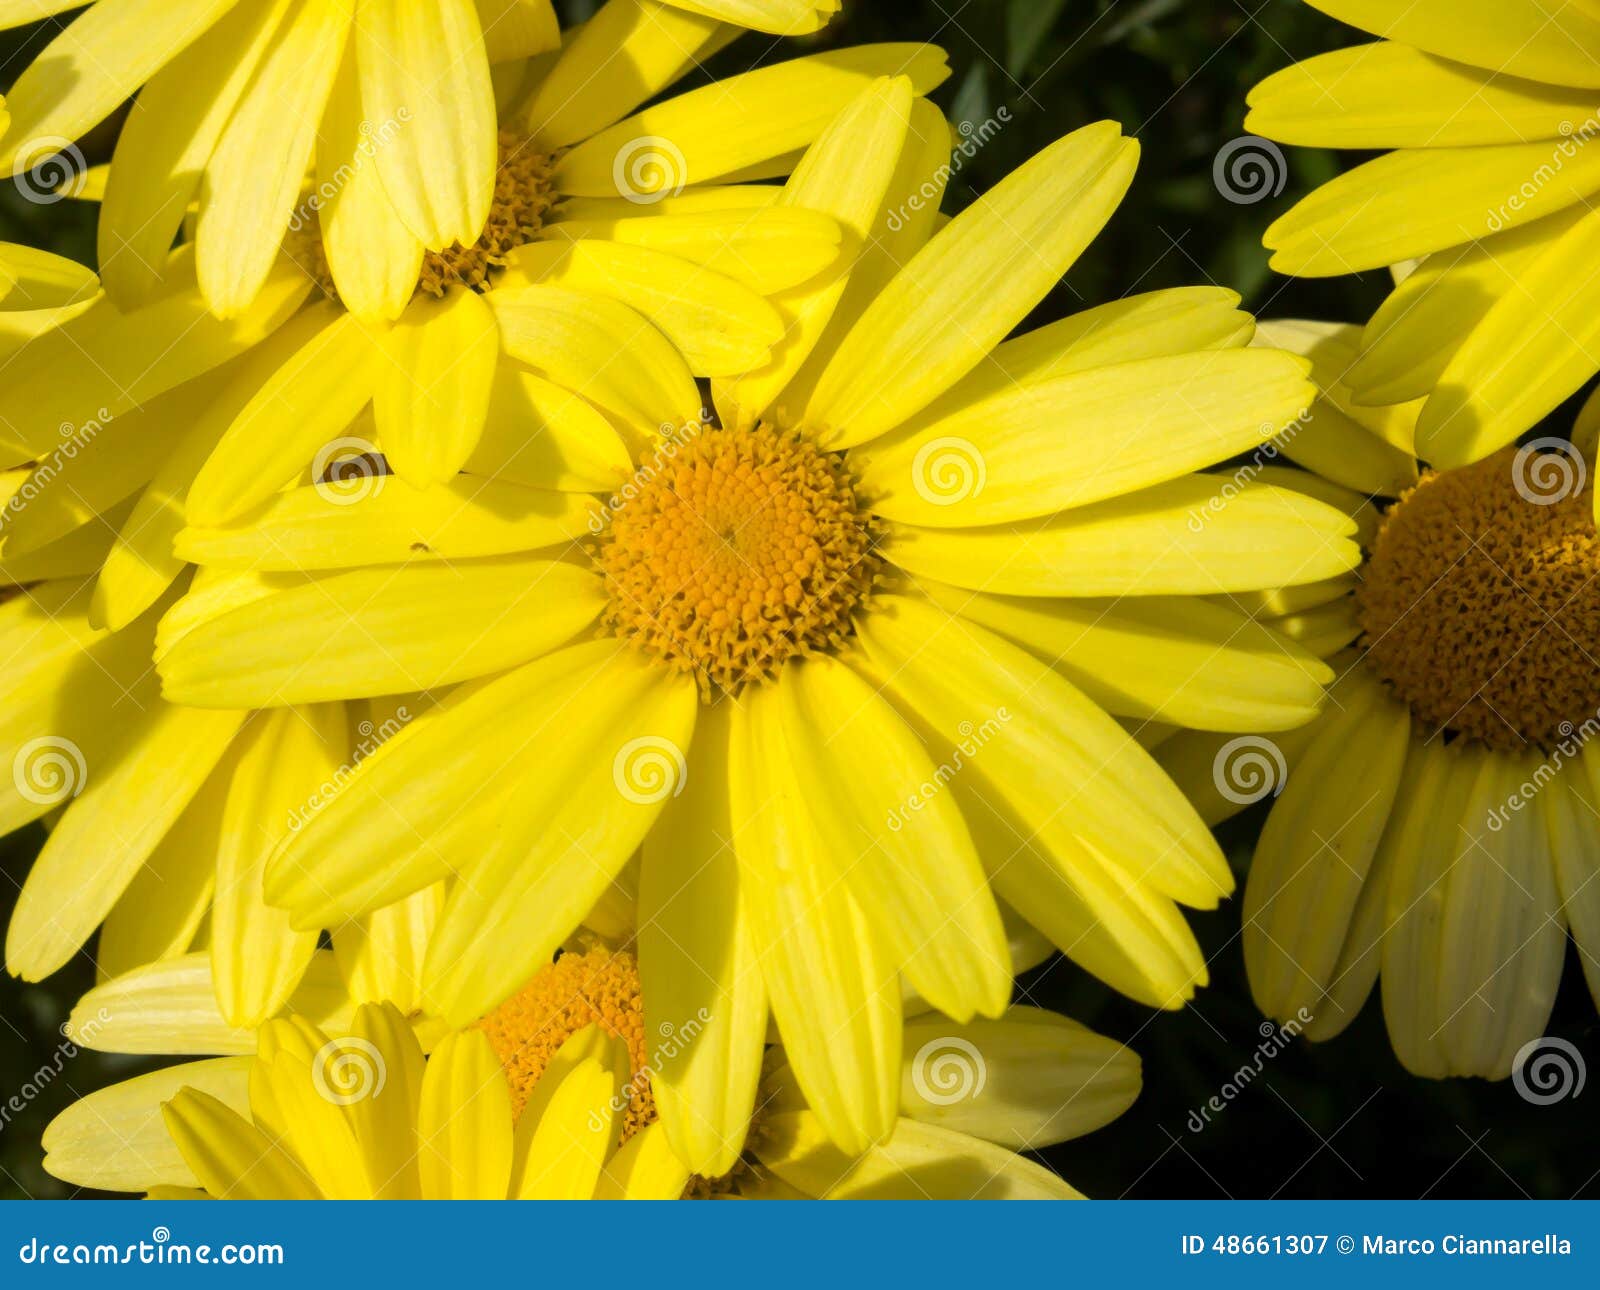 Close up of Arnica Flower. Arnica montana, European flowering plant used in herbal medicine